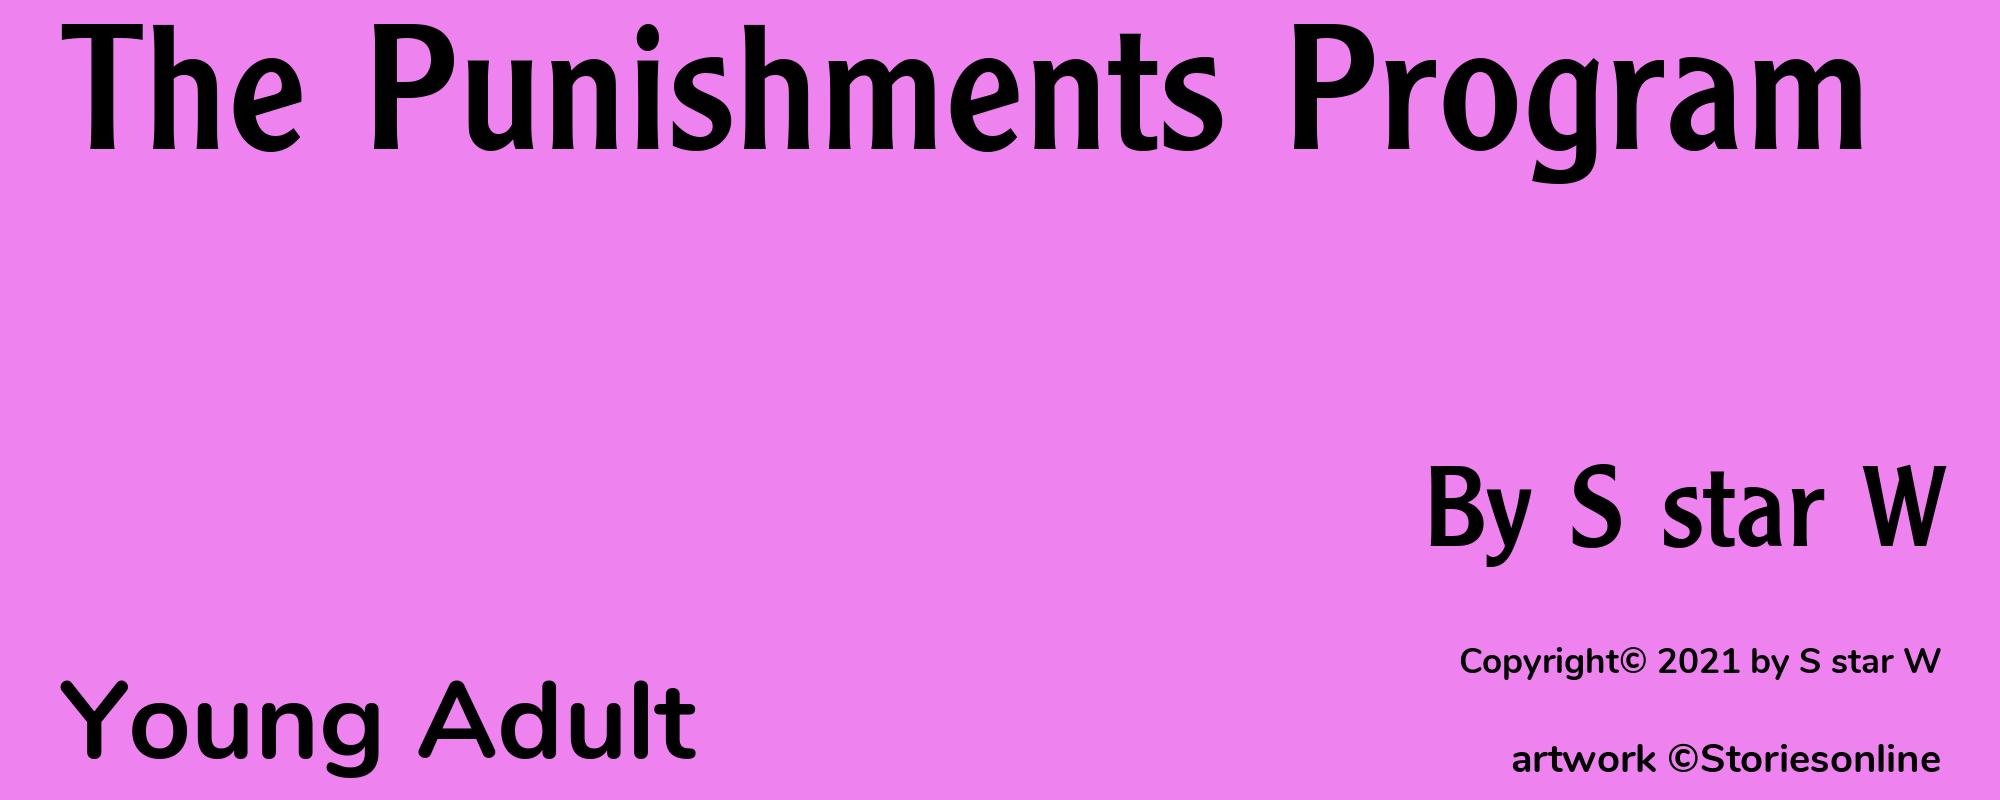 The Punishments Program - Cover